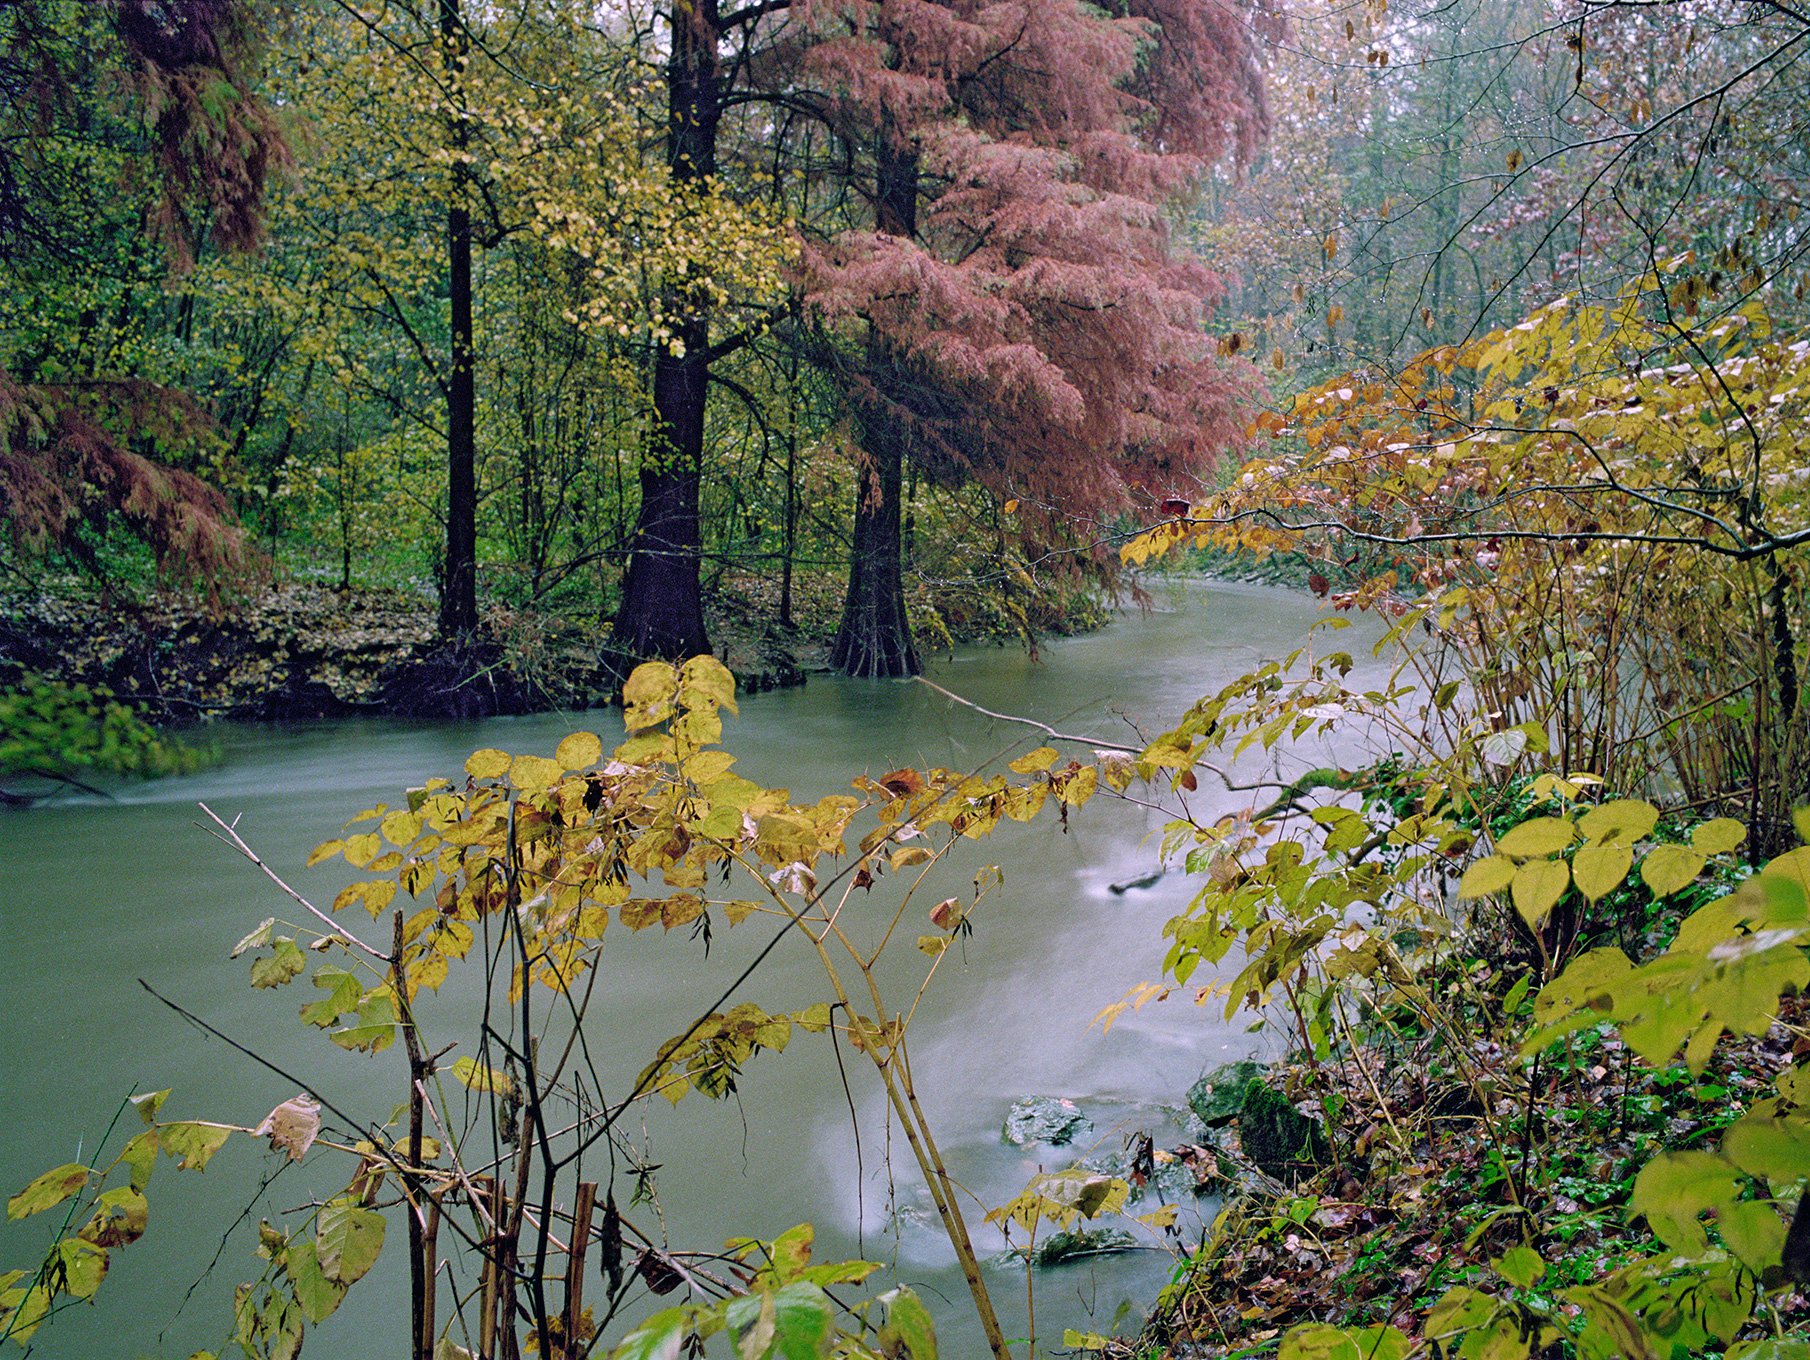   Autumn palette on the banks of Lambro river, late November 2021  